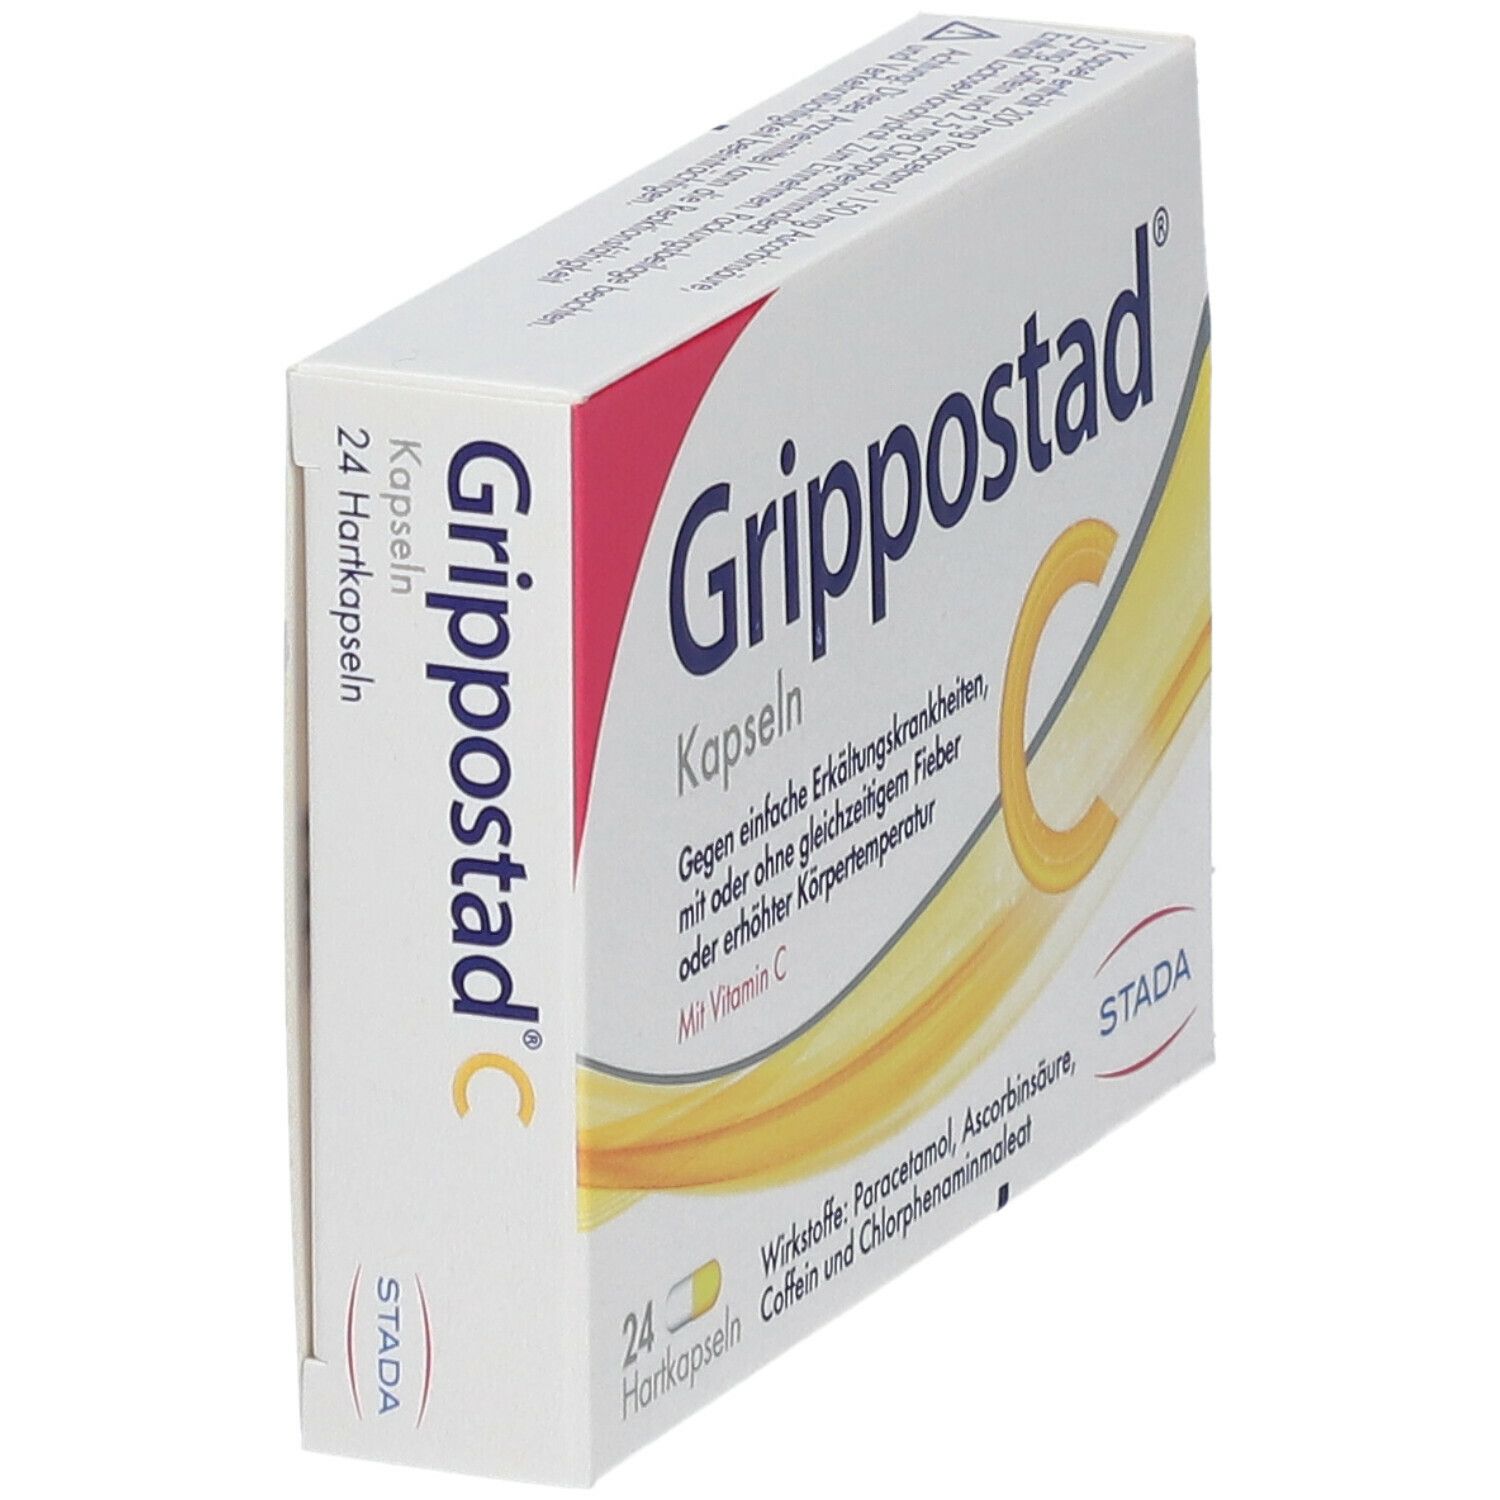 Grippostad® C